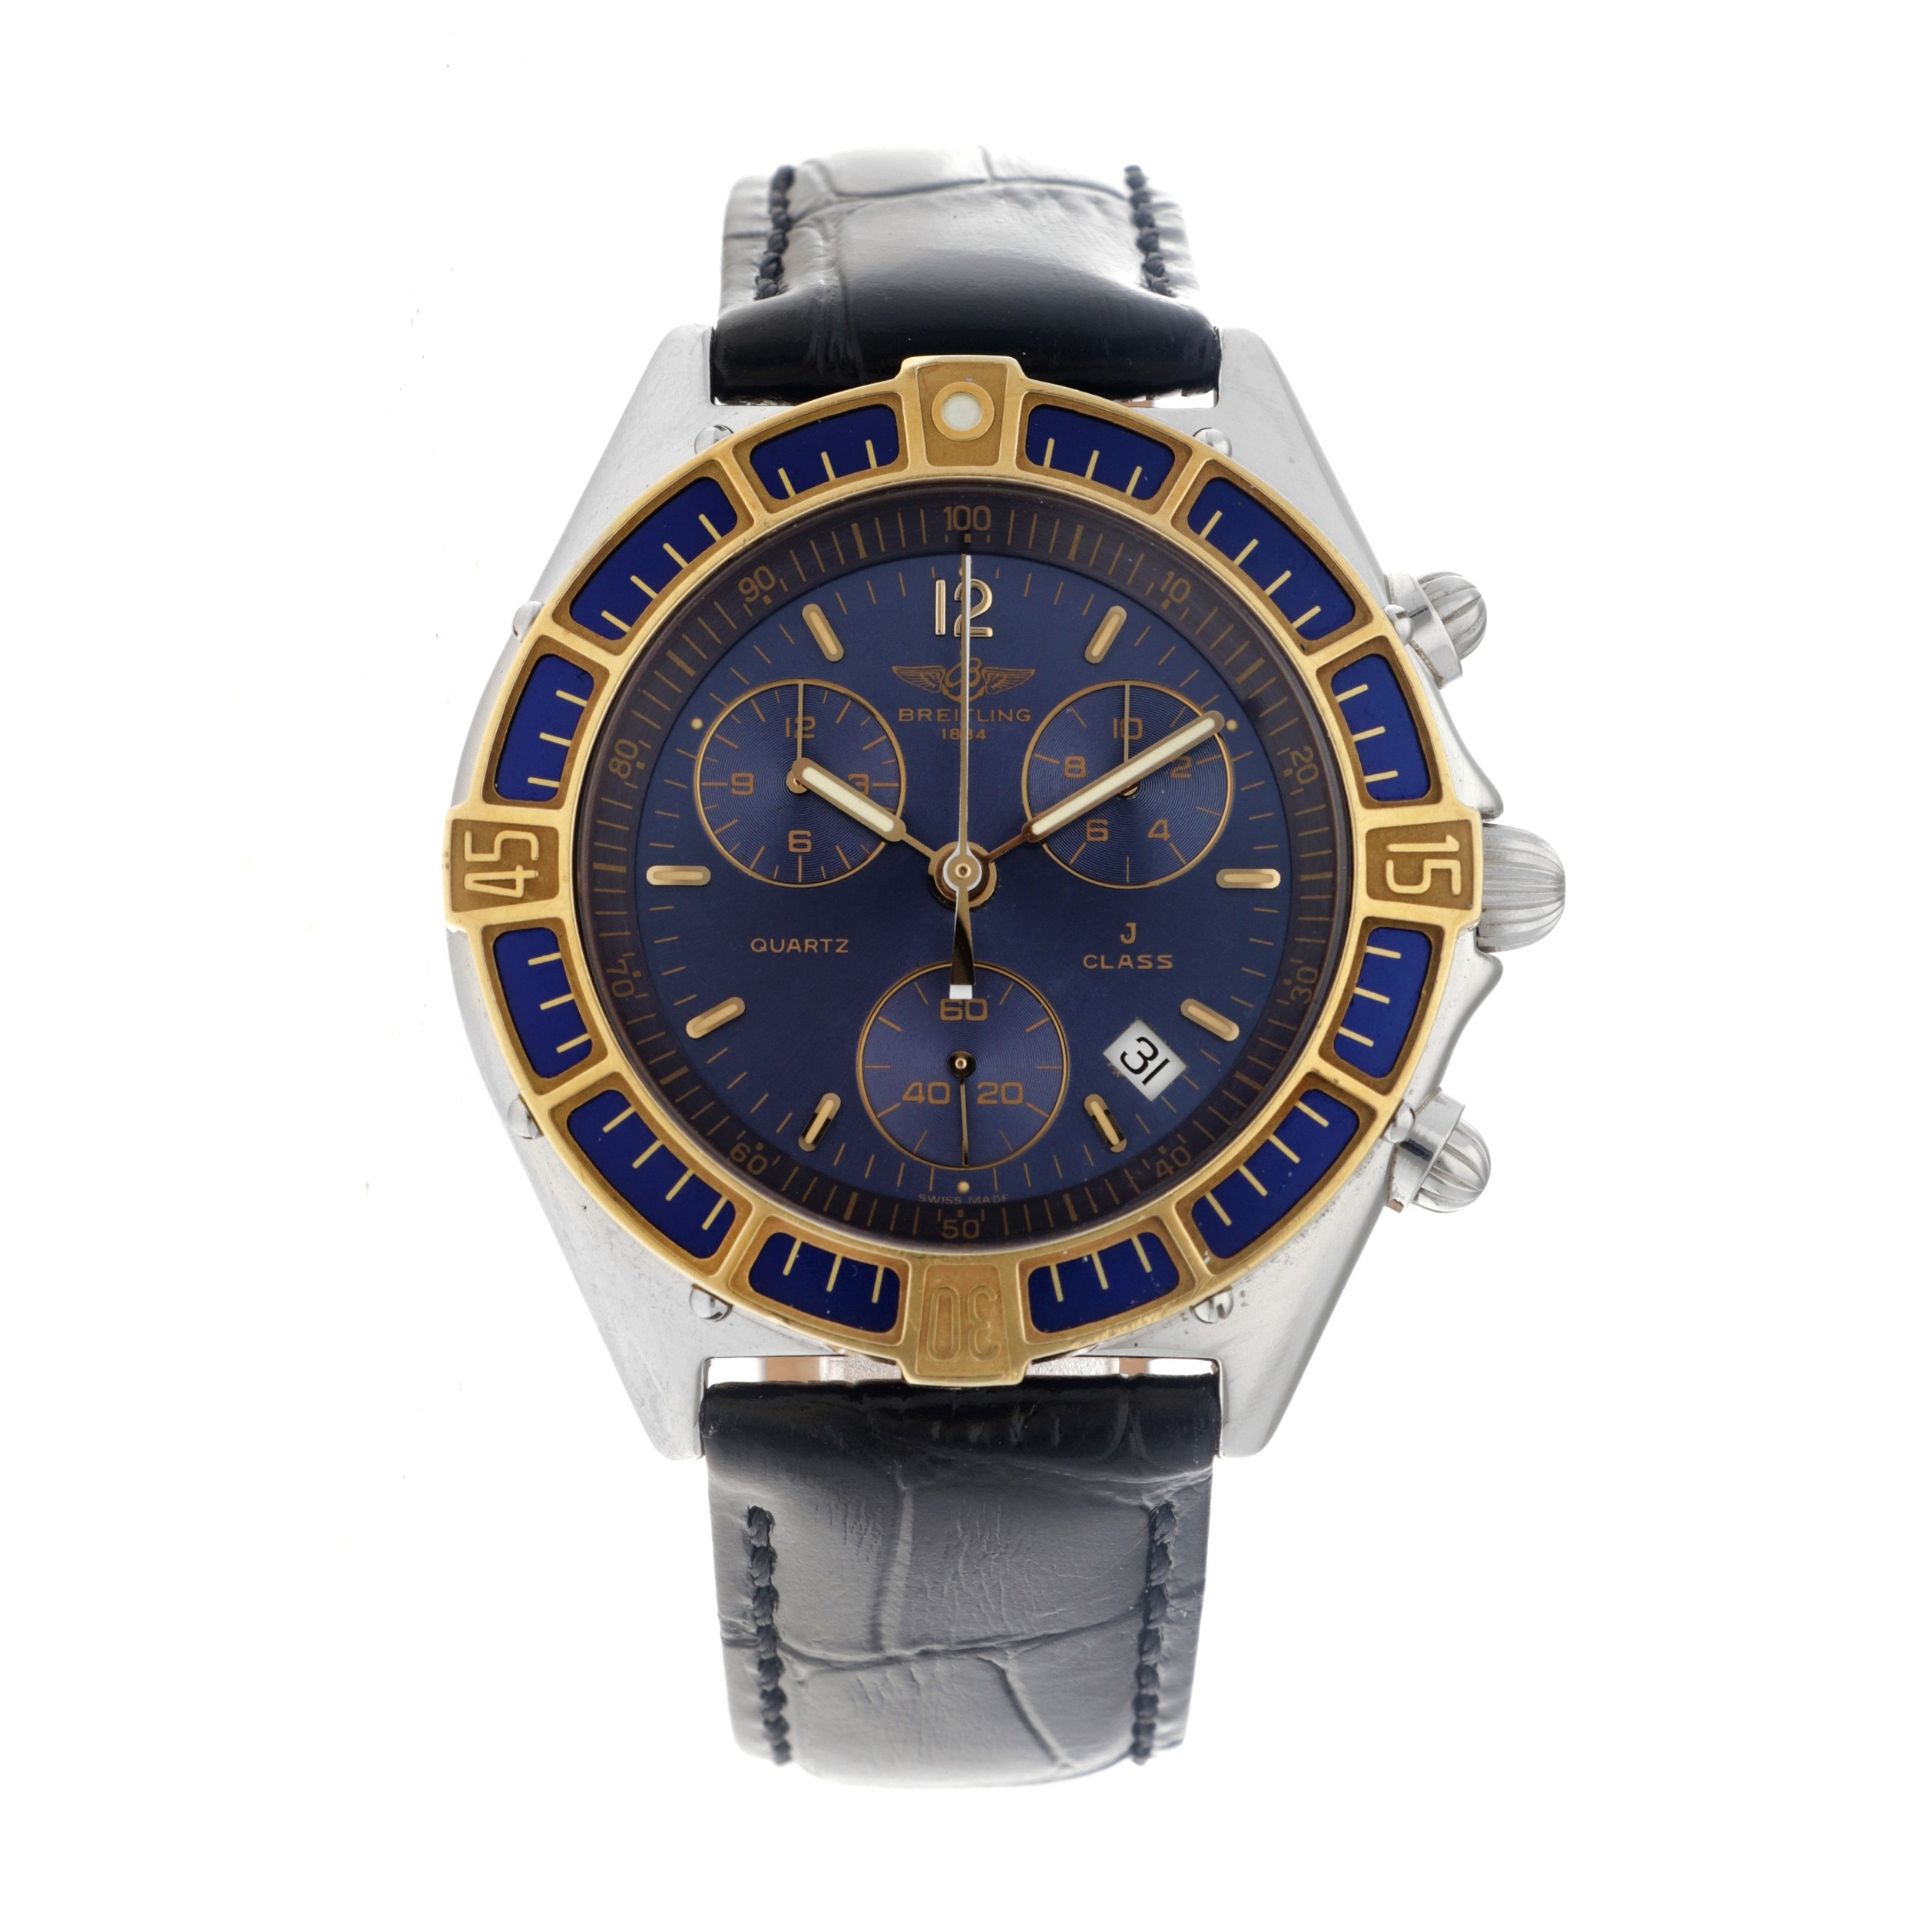 No Reserve - Breitling J-Class D53067 - Men's watch. 